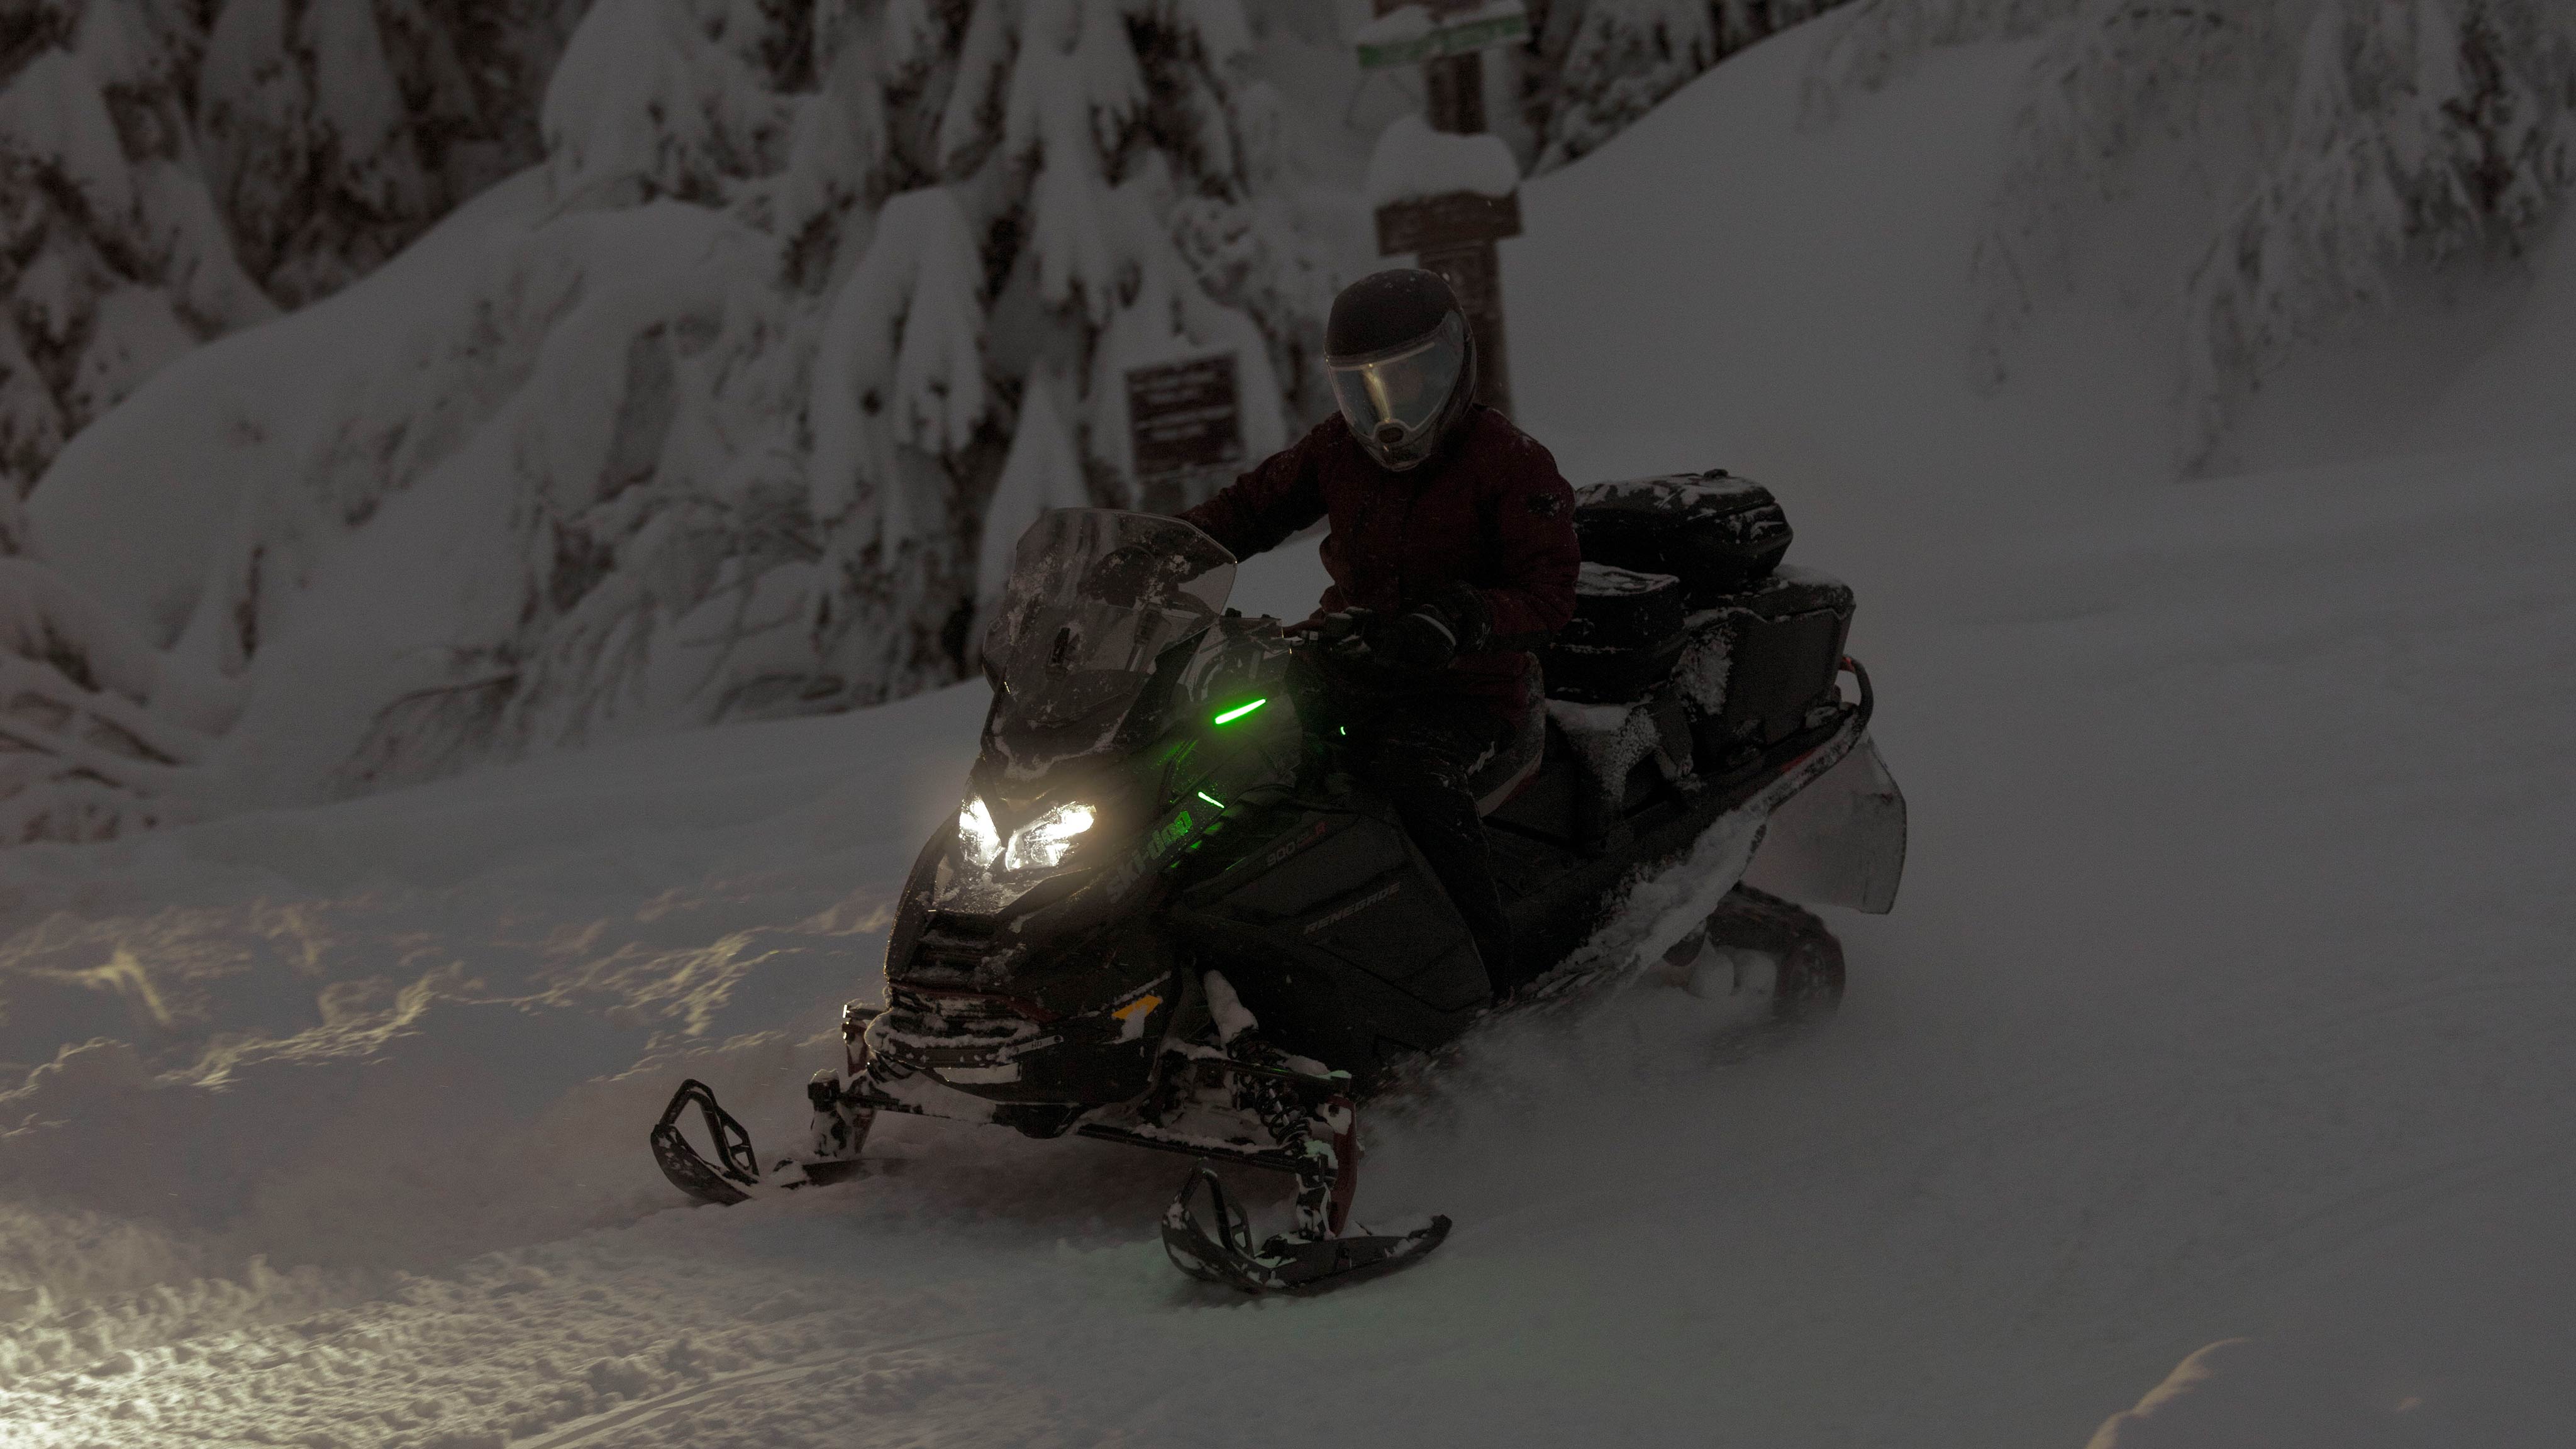 2025 Ski-Doo Renegade trail snowmobile riding at night